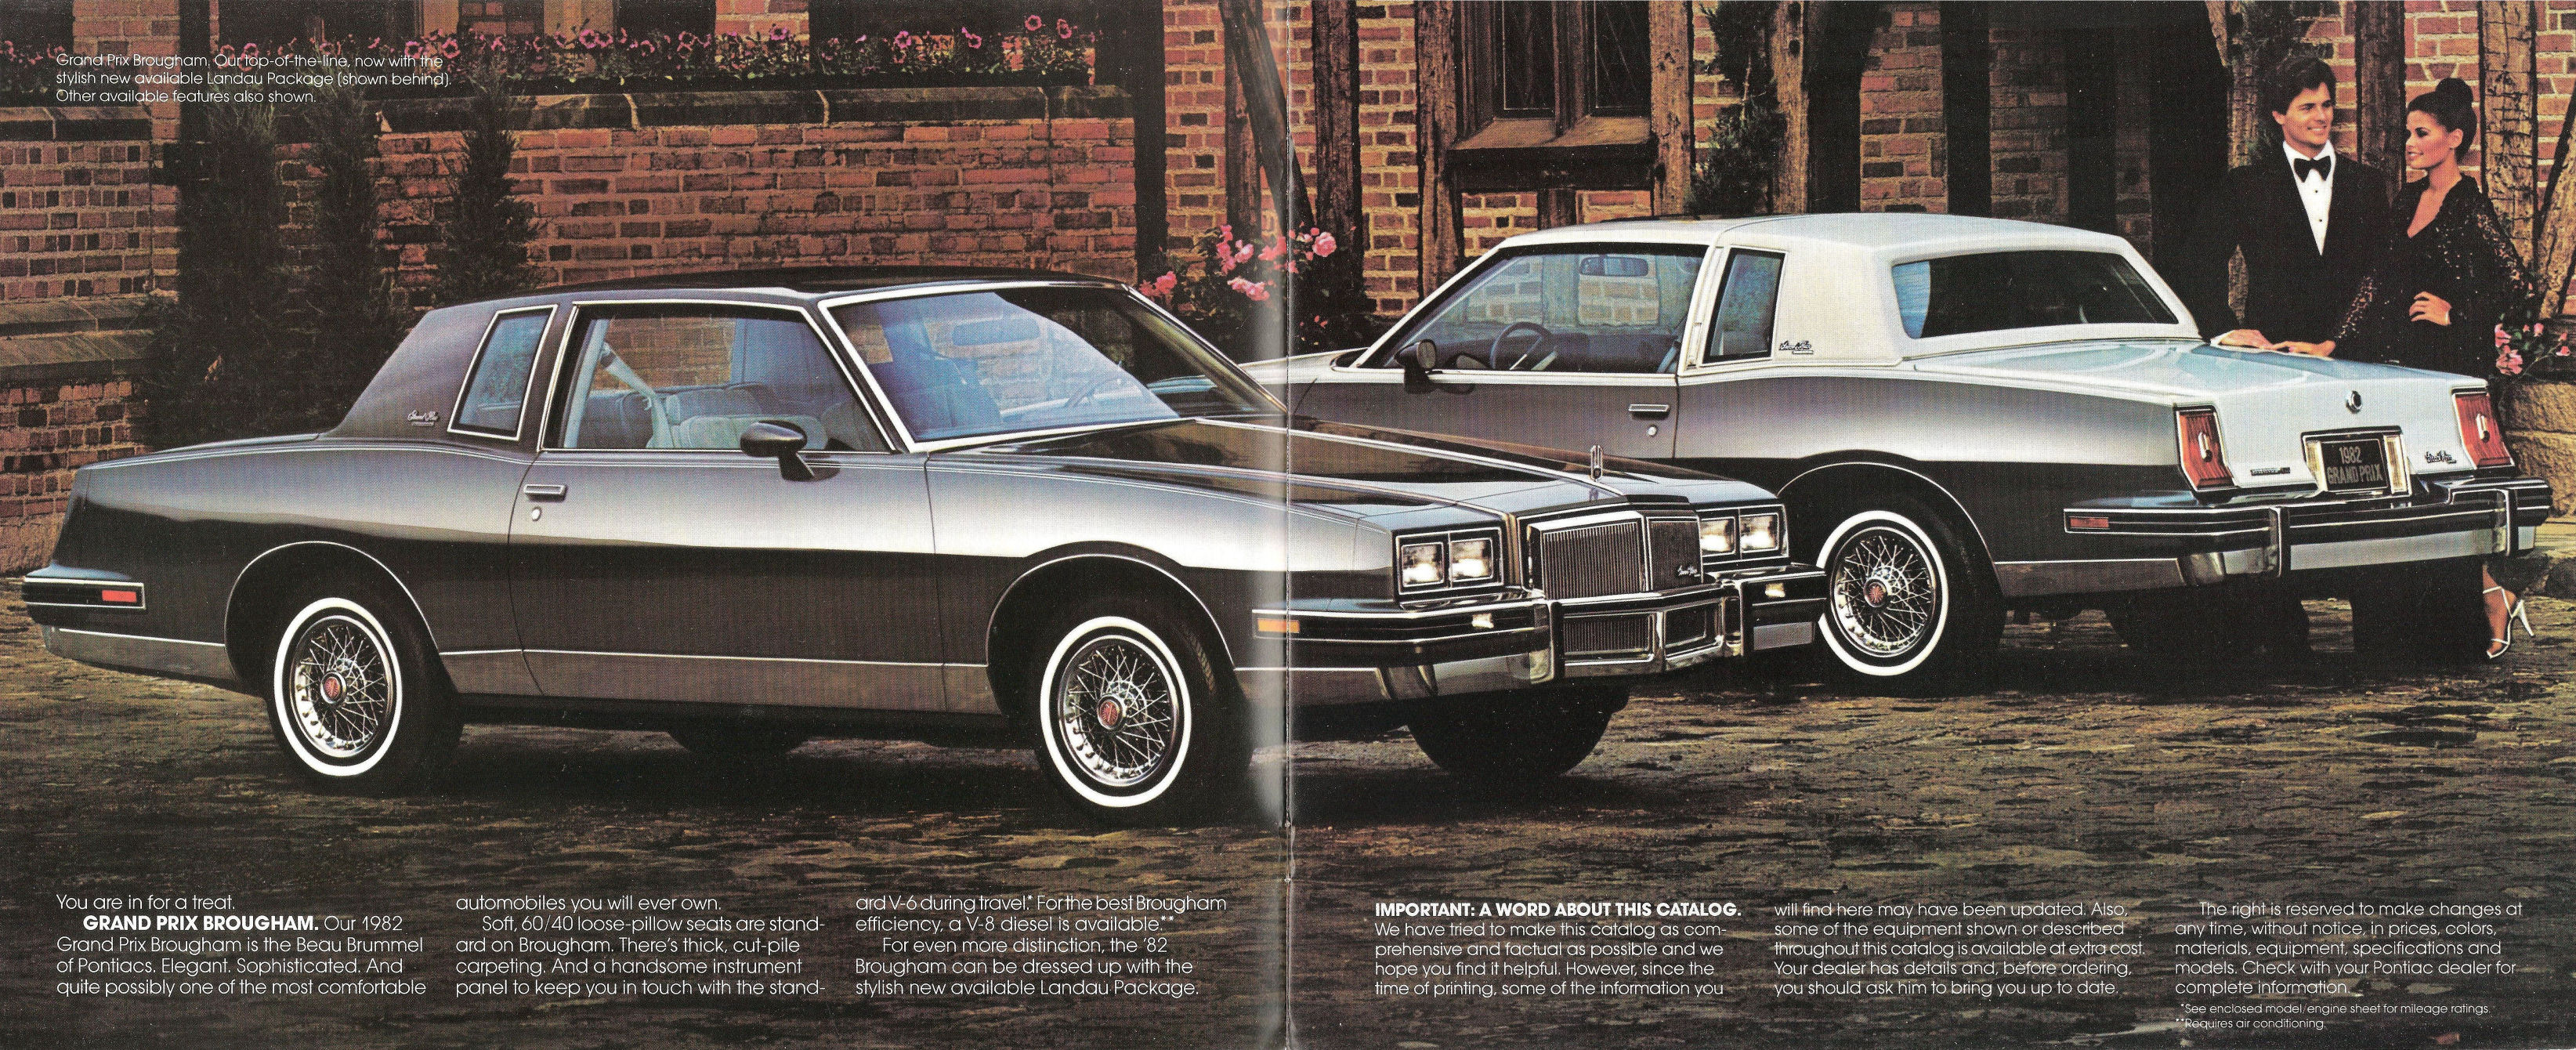 1982 Pontiac Grand Prix Sales Brochure 